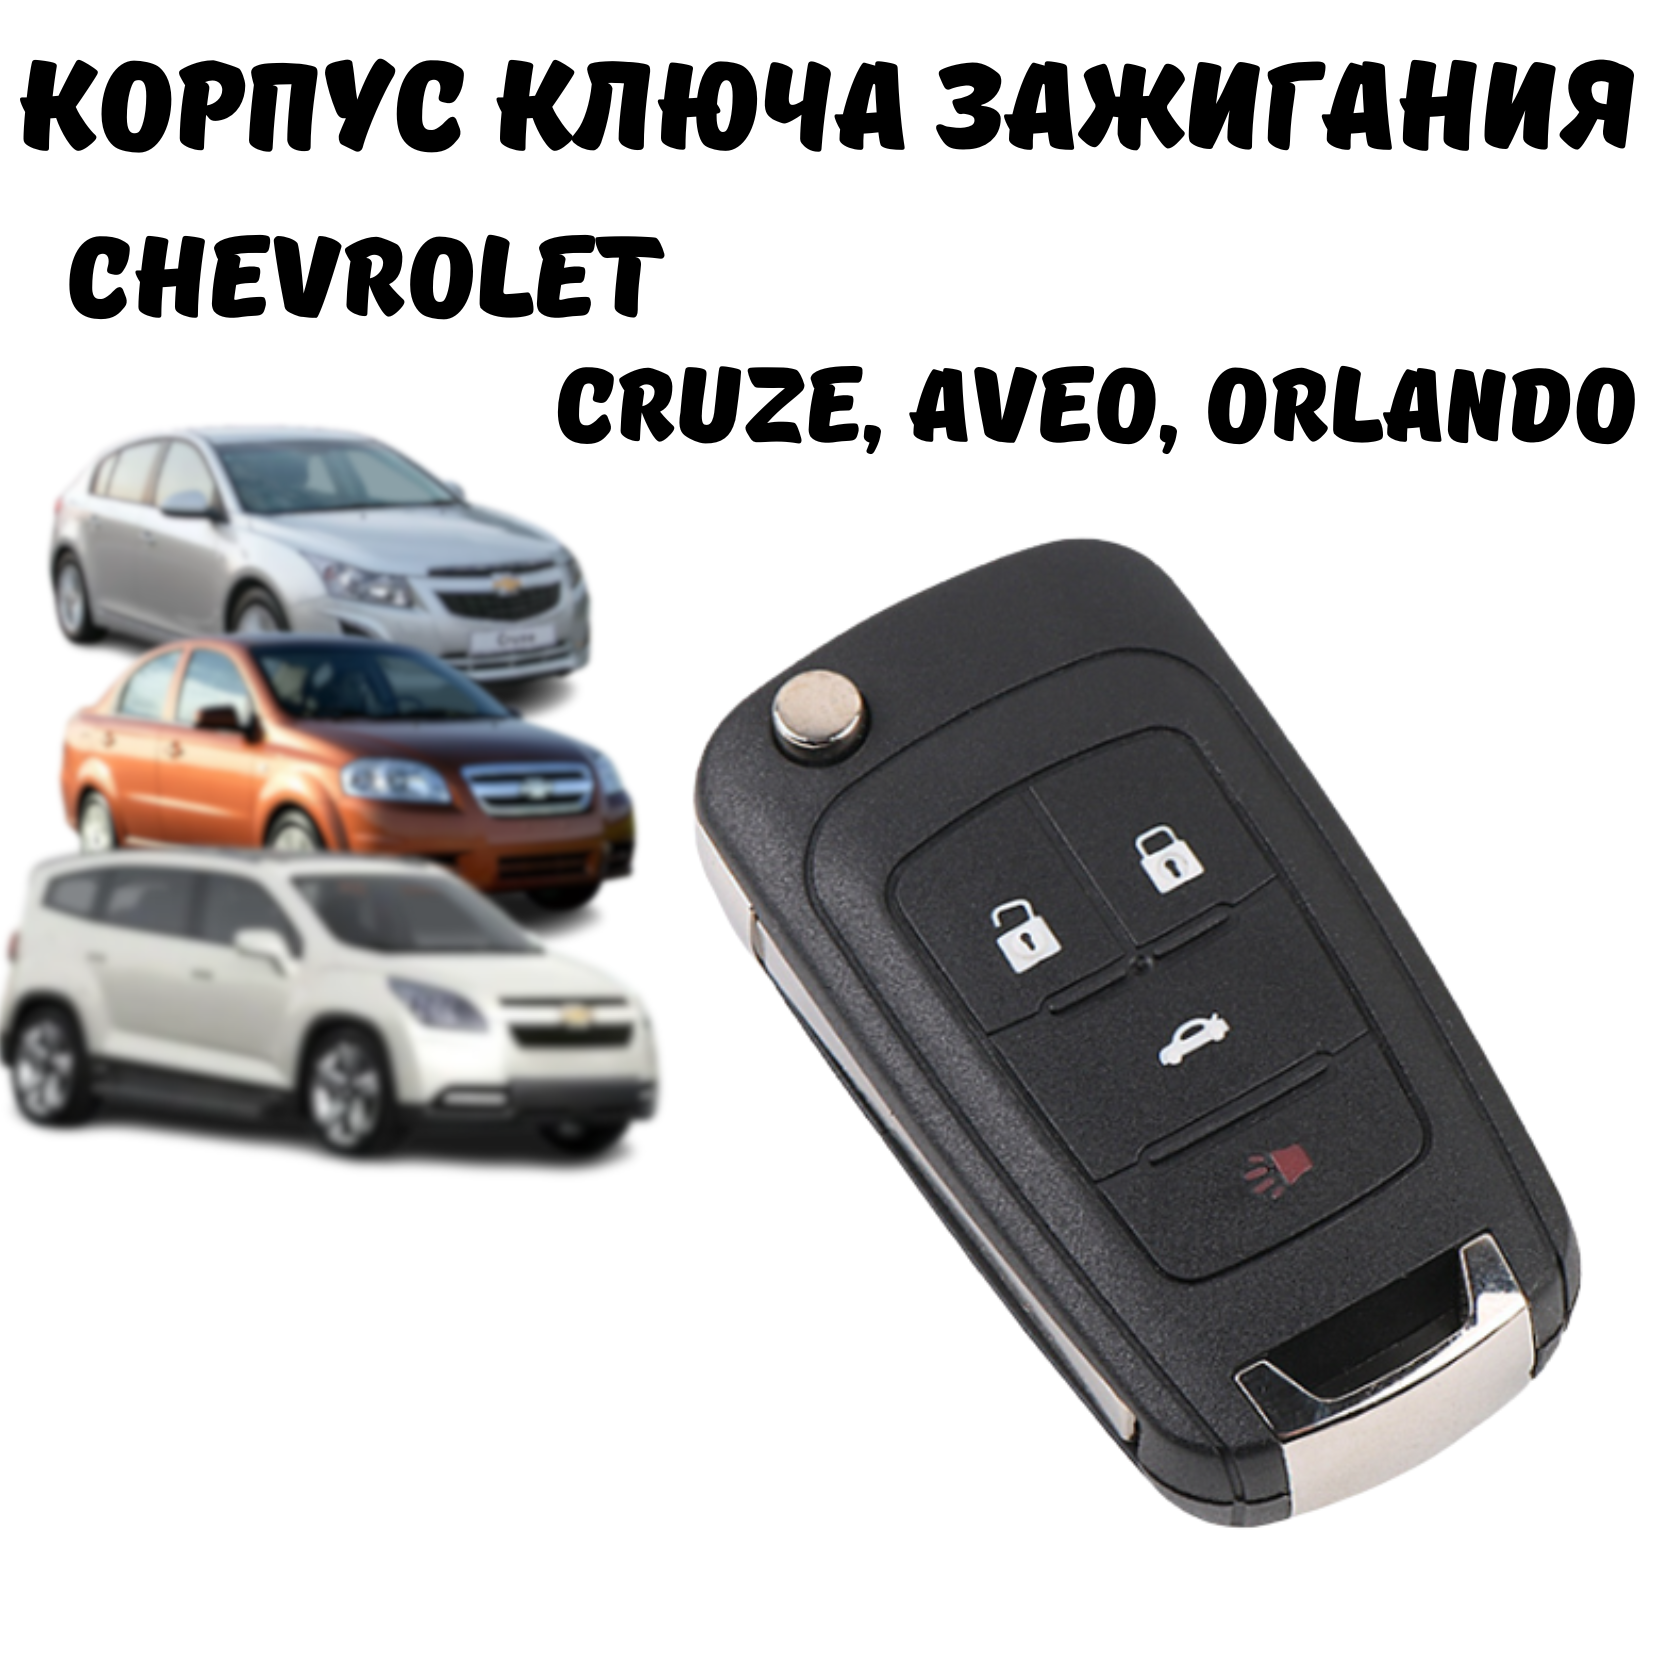 Корпус ключа зажигания Chevrolet Cruze Aveo Orlando 4 кнопки